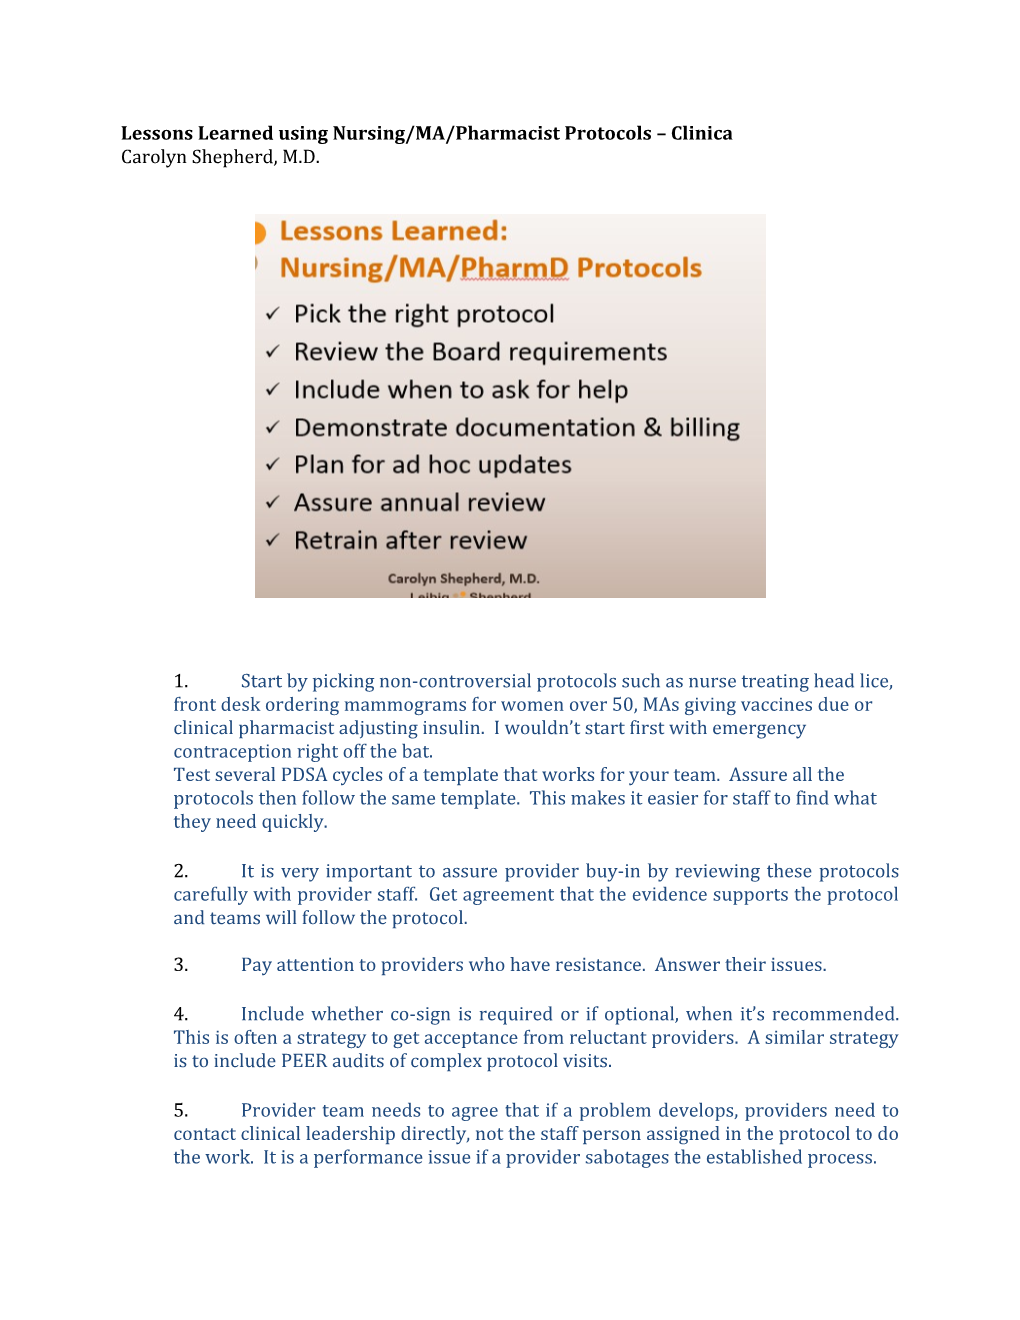 Lessons Learned Using Nursing/MA/Pharmacist Protocols Clinica